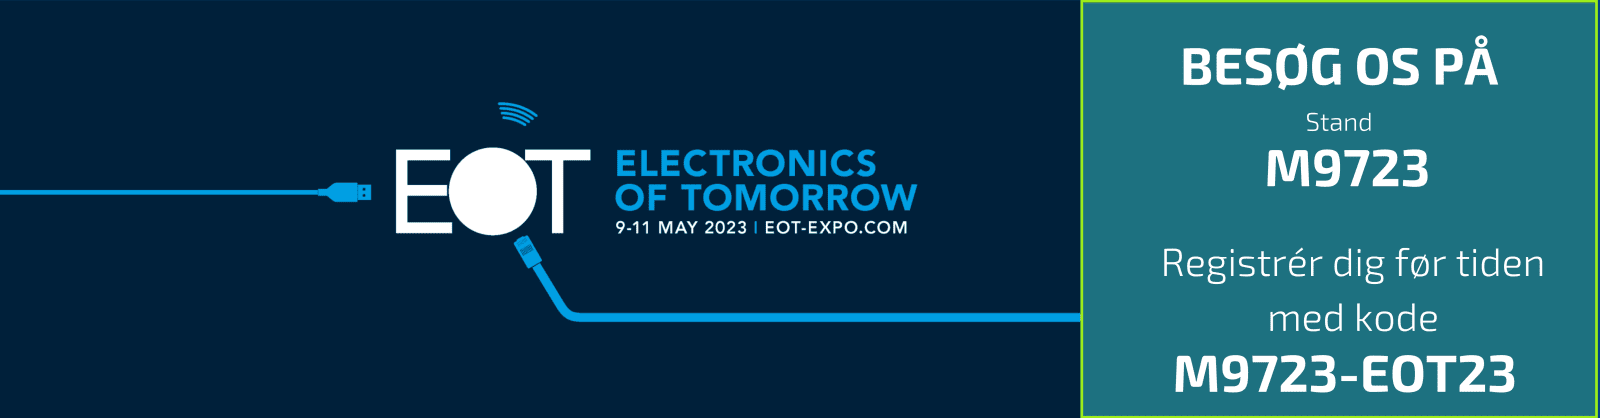 Visit EKTOS Stand M9723 at Electronics of Tomorrow – EOT 2023